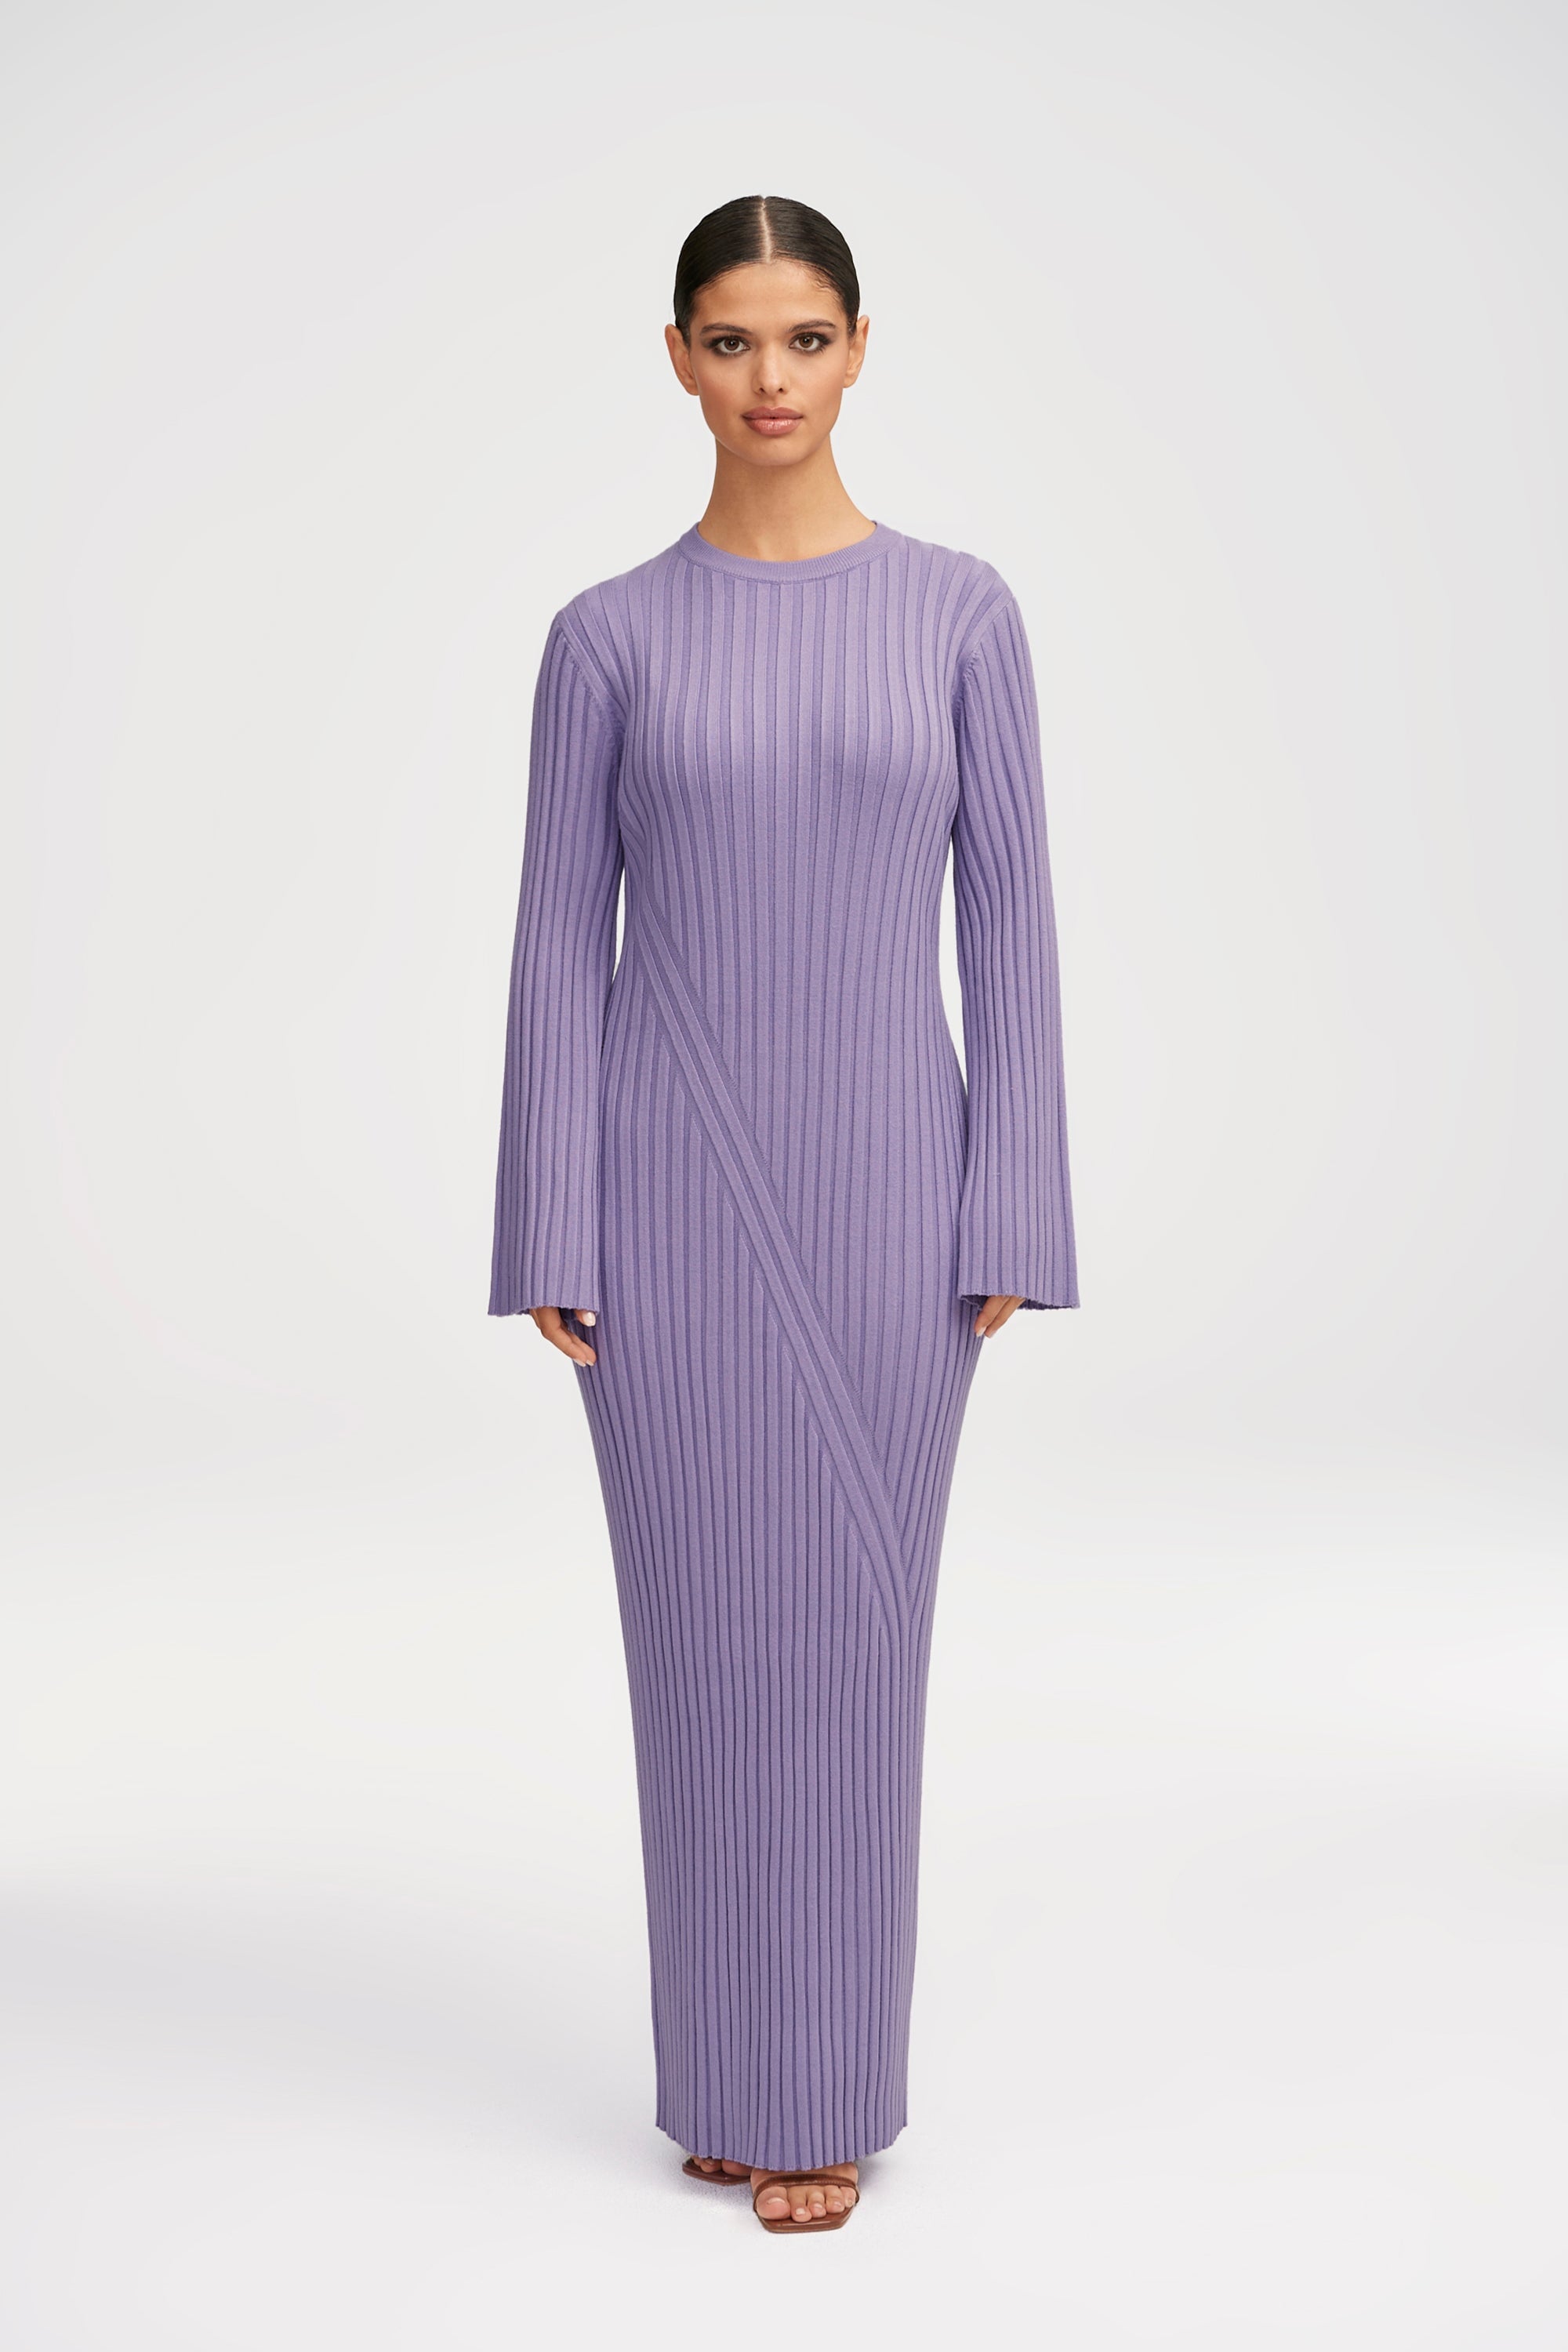 Melanie Ribbed Knit Maxi Dress - Lavender Clothing epschoolboard 